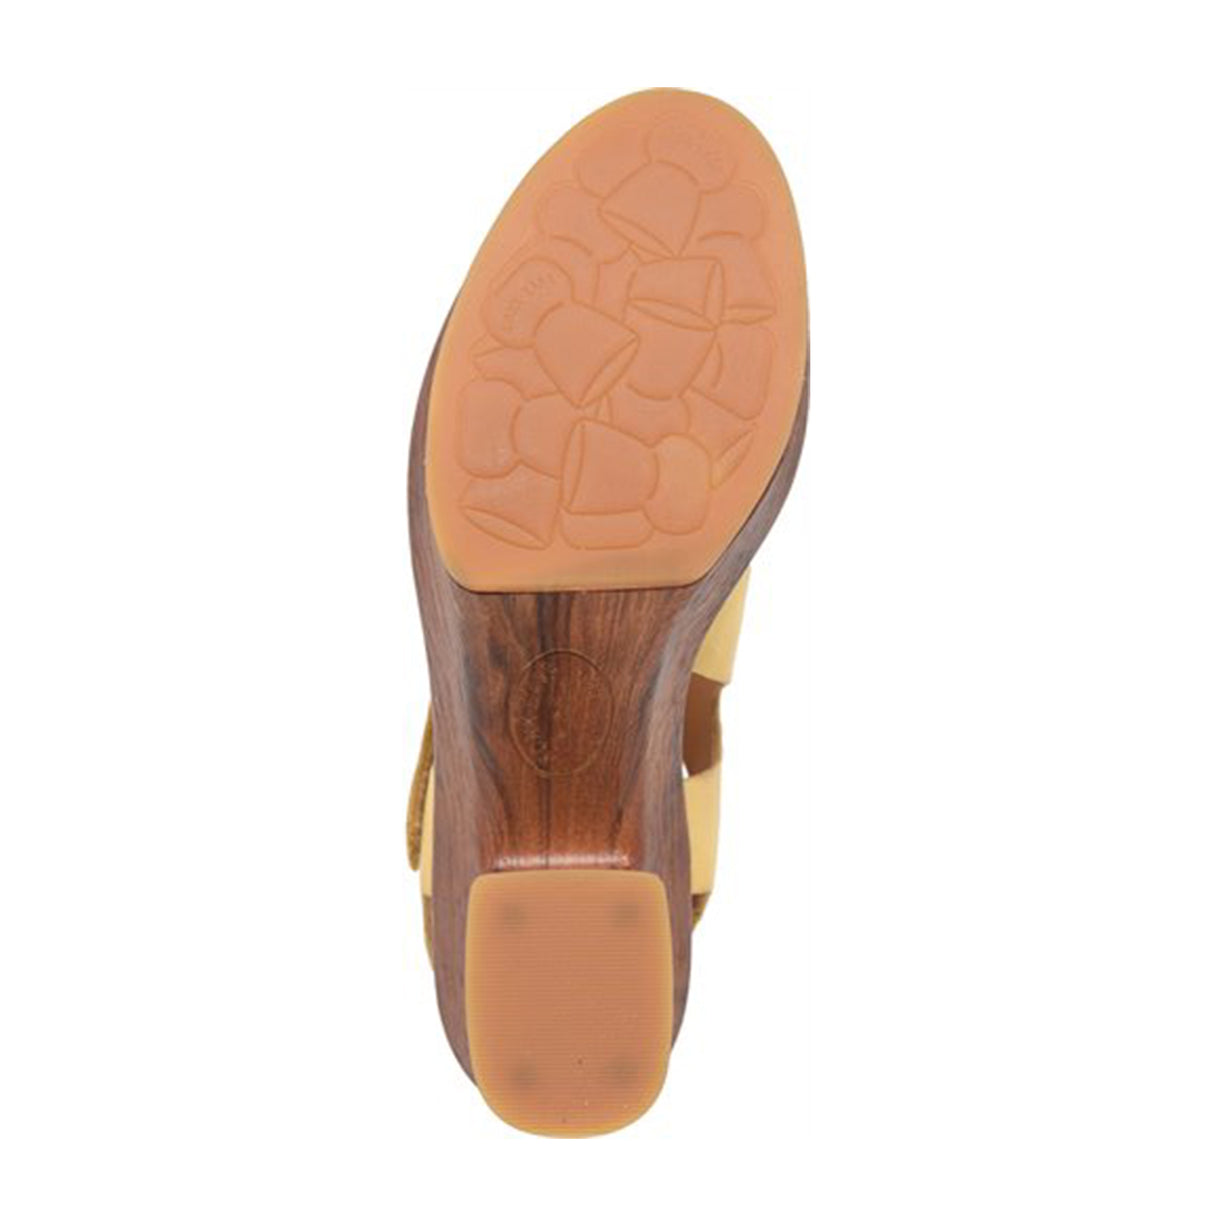 Kork-Ease Cantal Heeled Sandal (Women) - Yellow Sandals - Heel/Wedge - The Heel Shoe Fitters